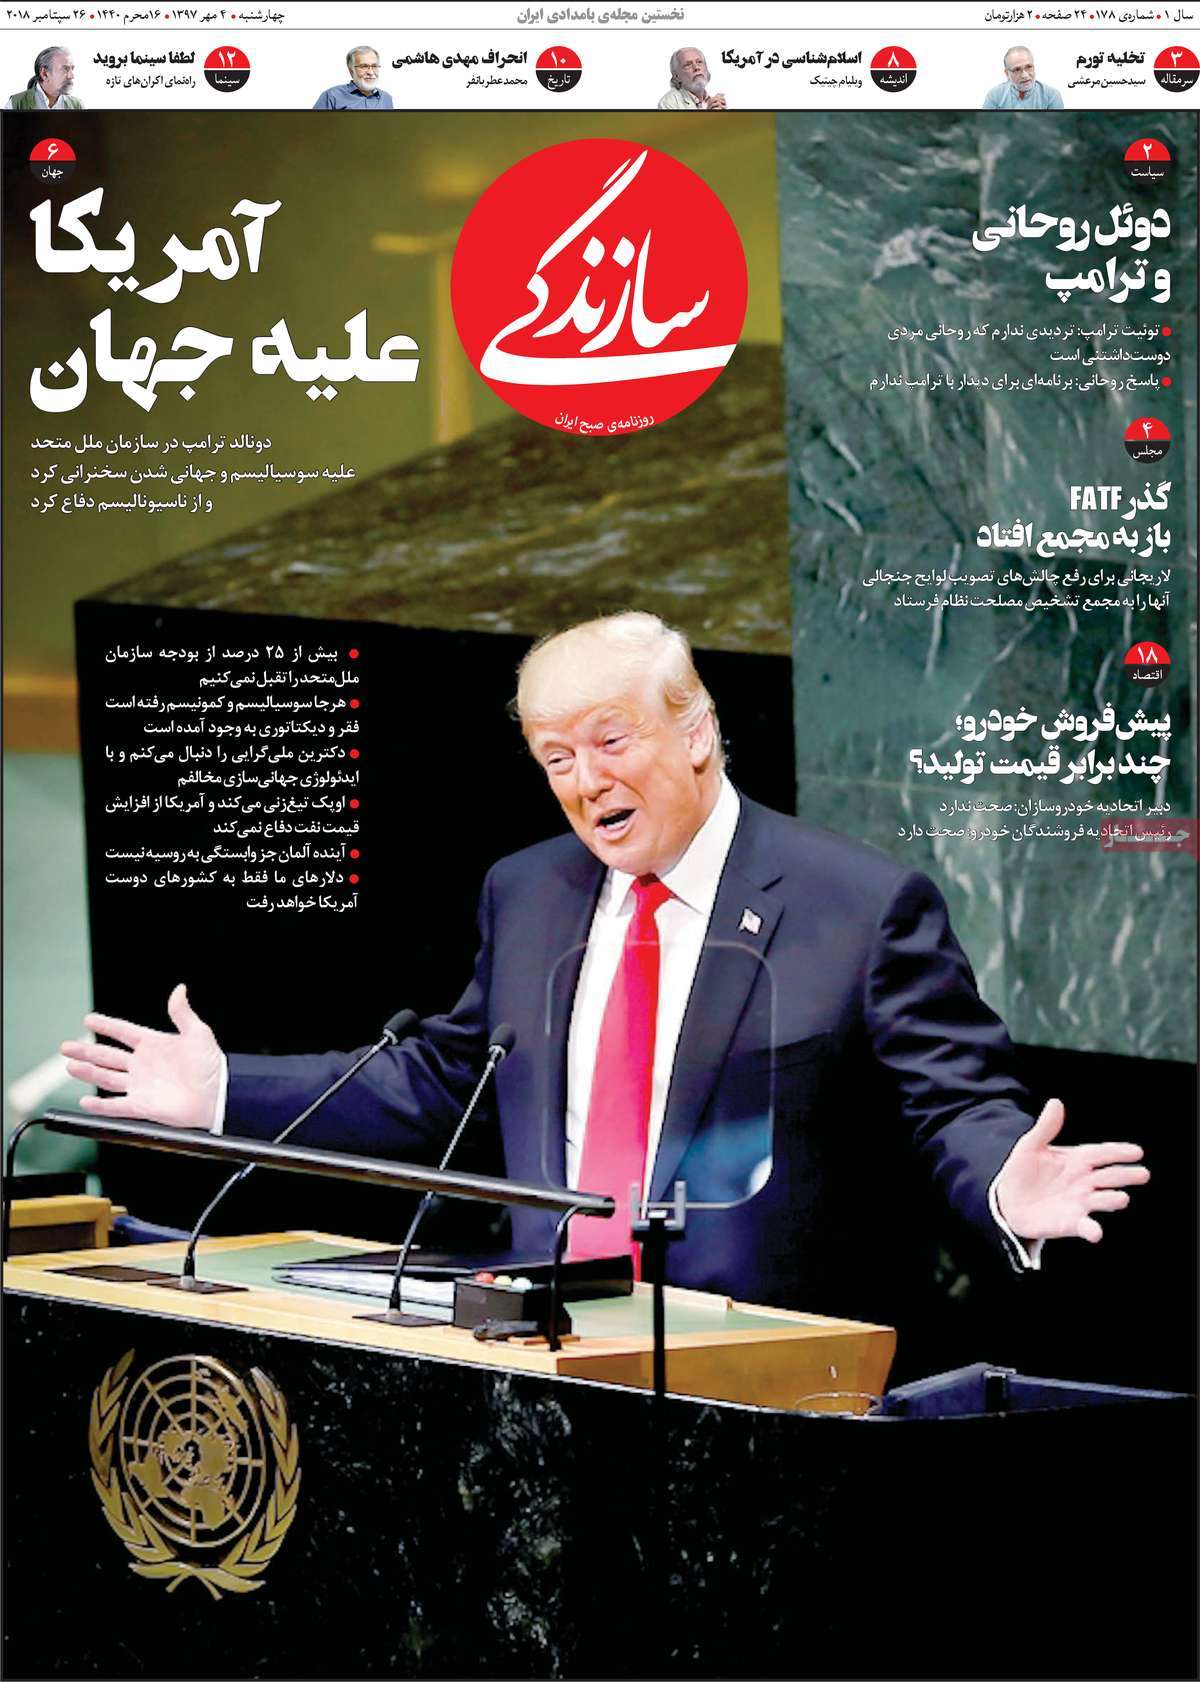 UNGA Speeches Make Headlines in Iran on September 26